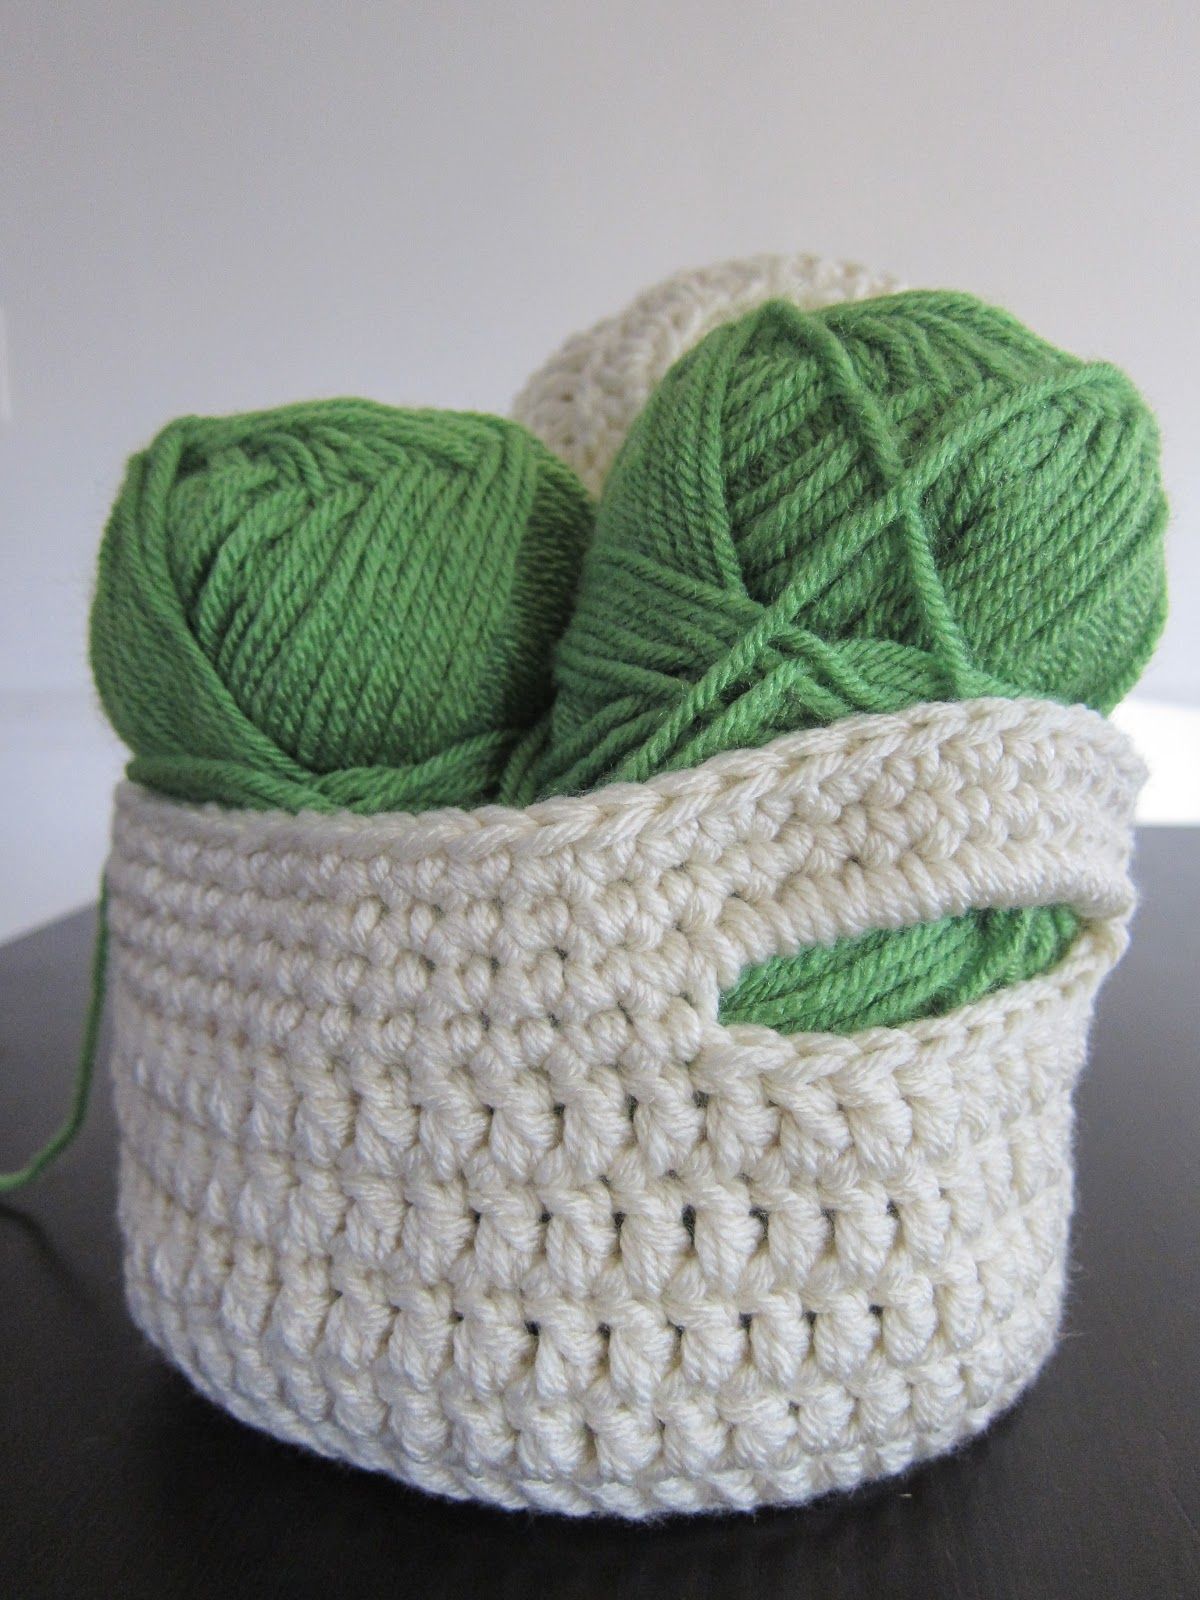 Crochet stash basket pattern